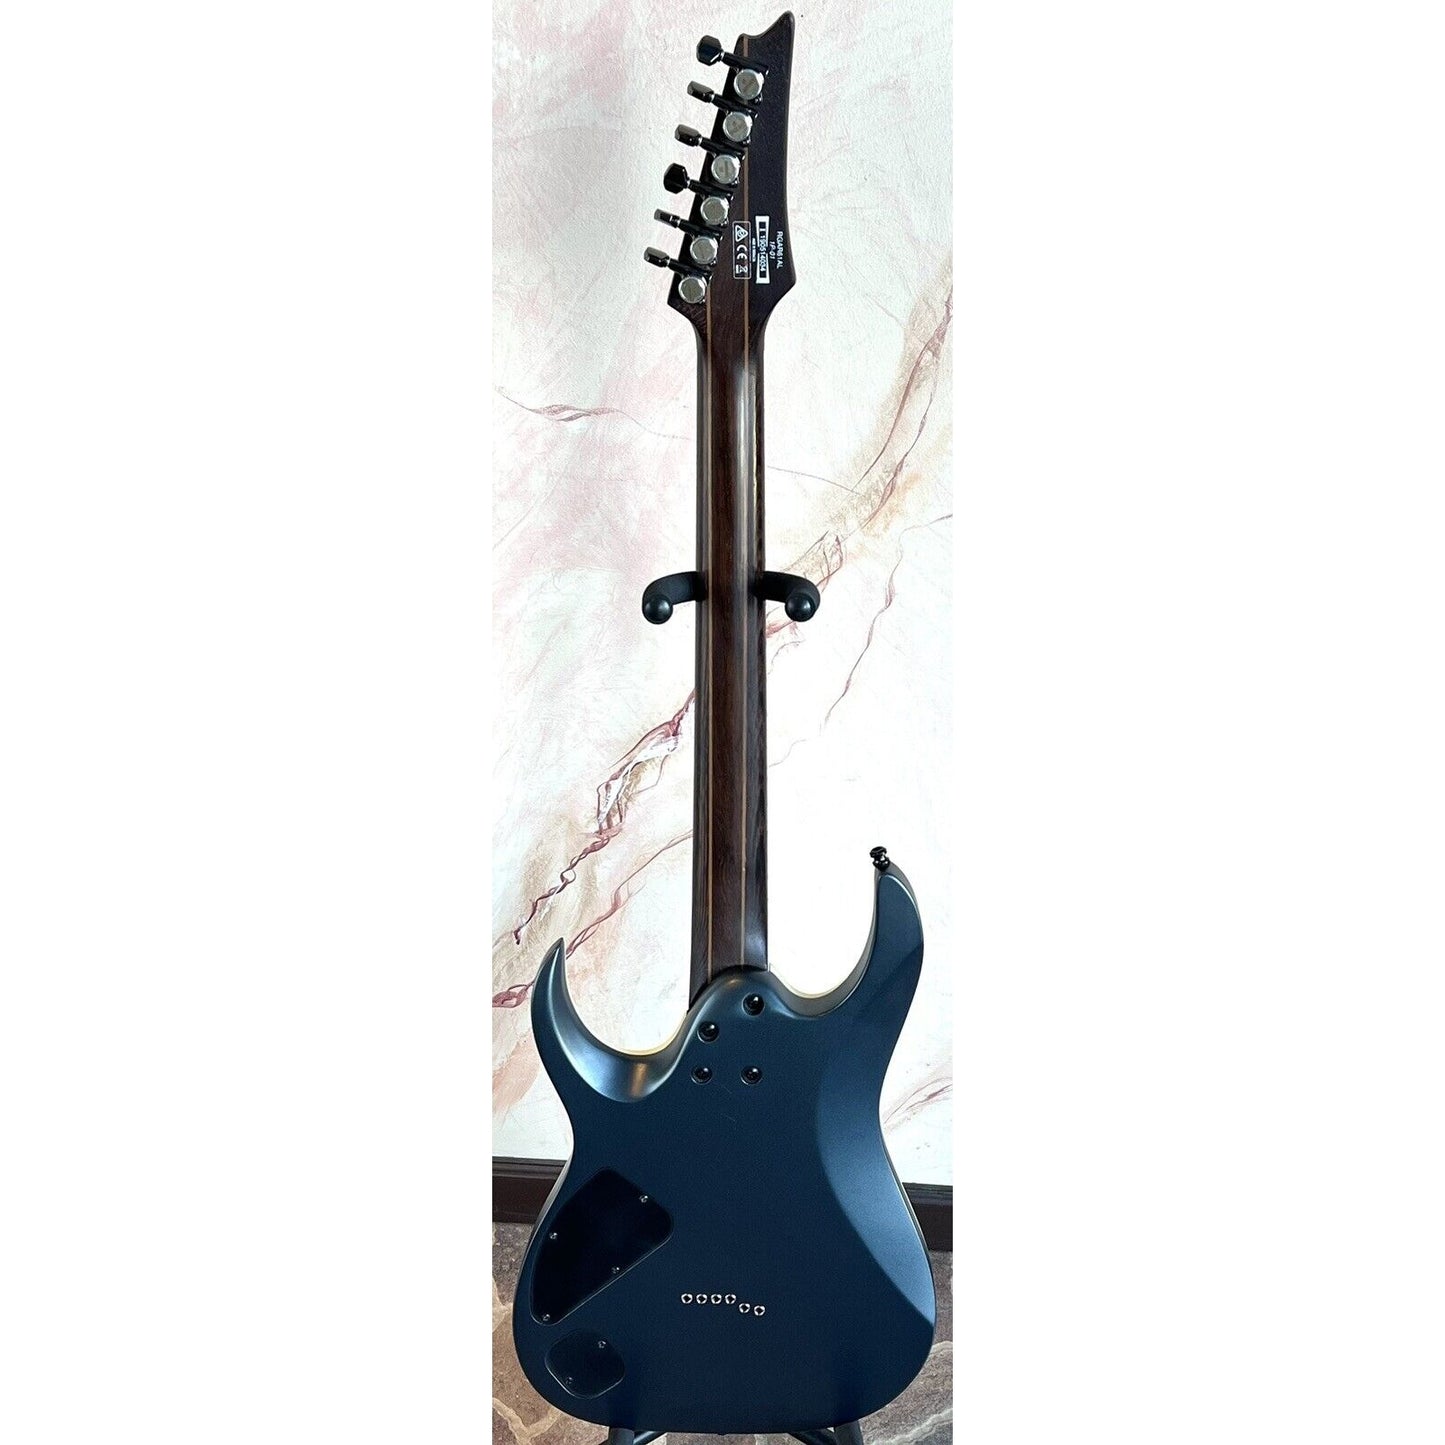 RARE 2019 Ibanez RGAR61AL Axion RGA Electric Guitar - Black Aurora Burst Flat